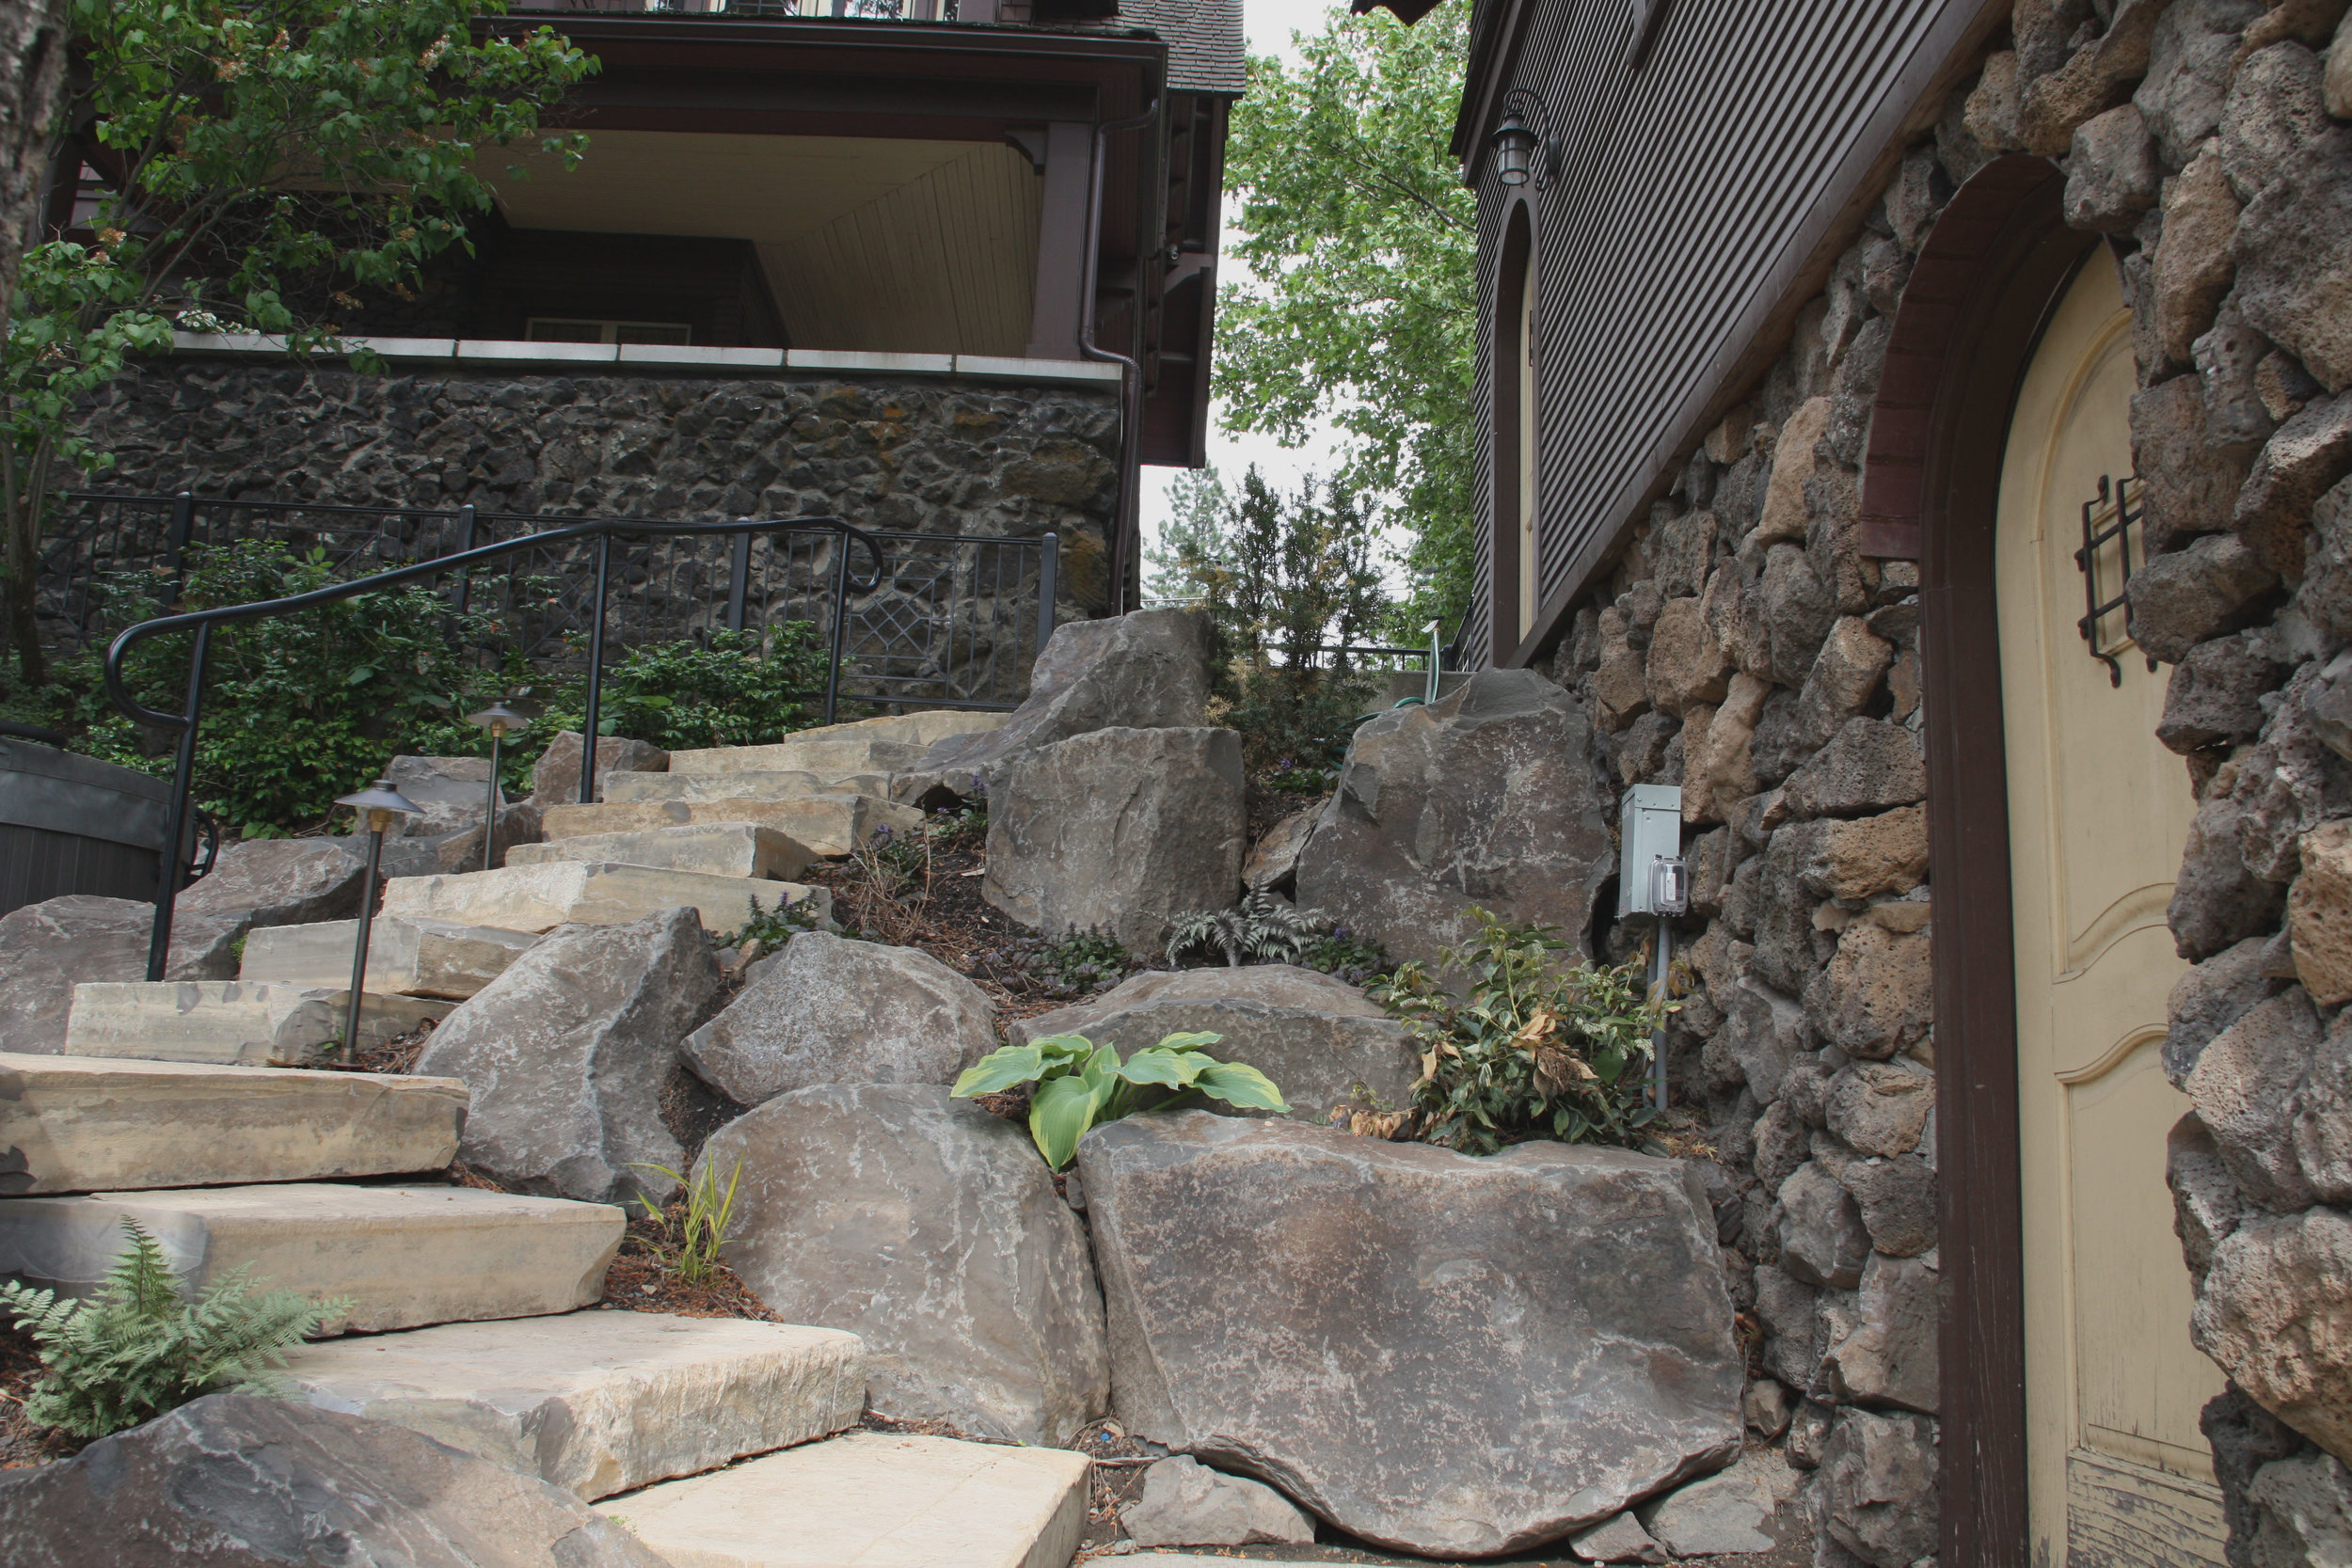 spokane rock steps and boulder walls